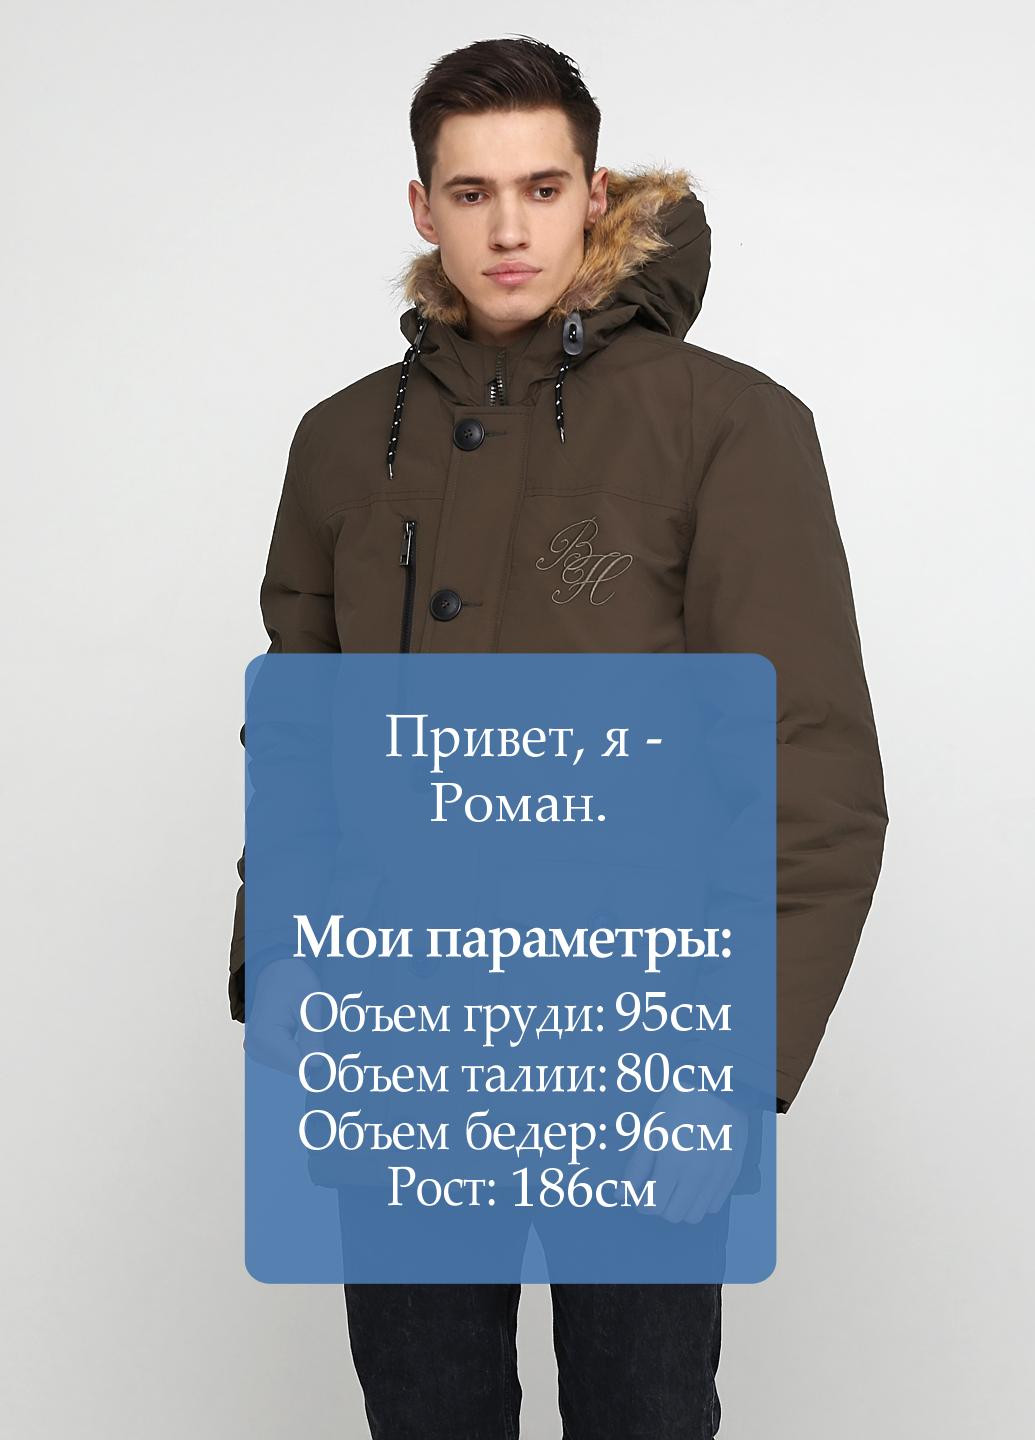 Оливковая (хаки) зимняя куртка BECK & HERSEY